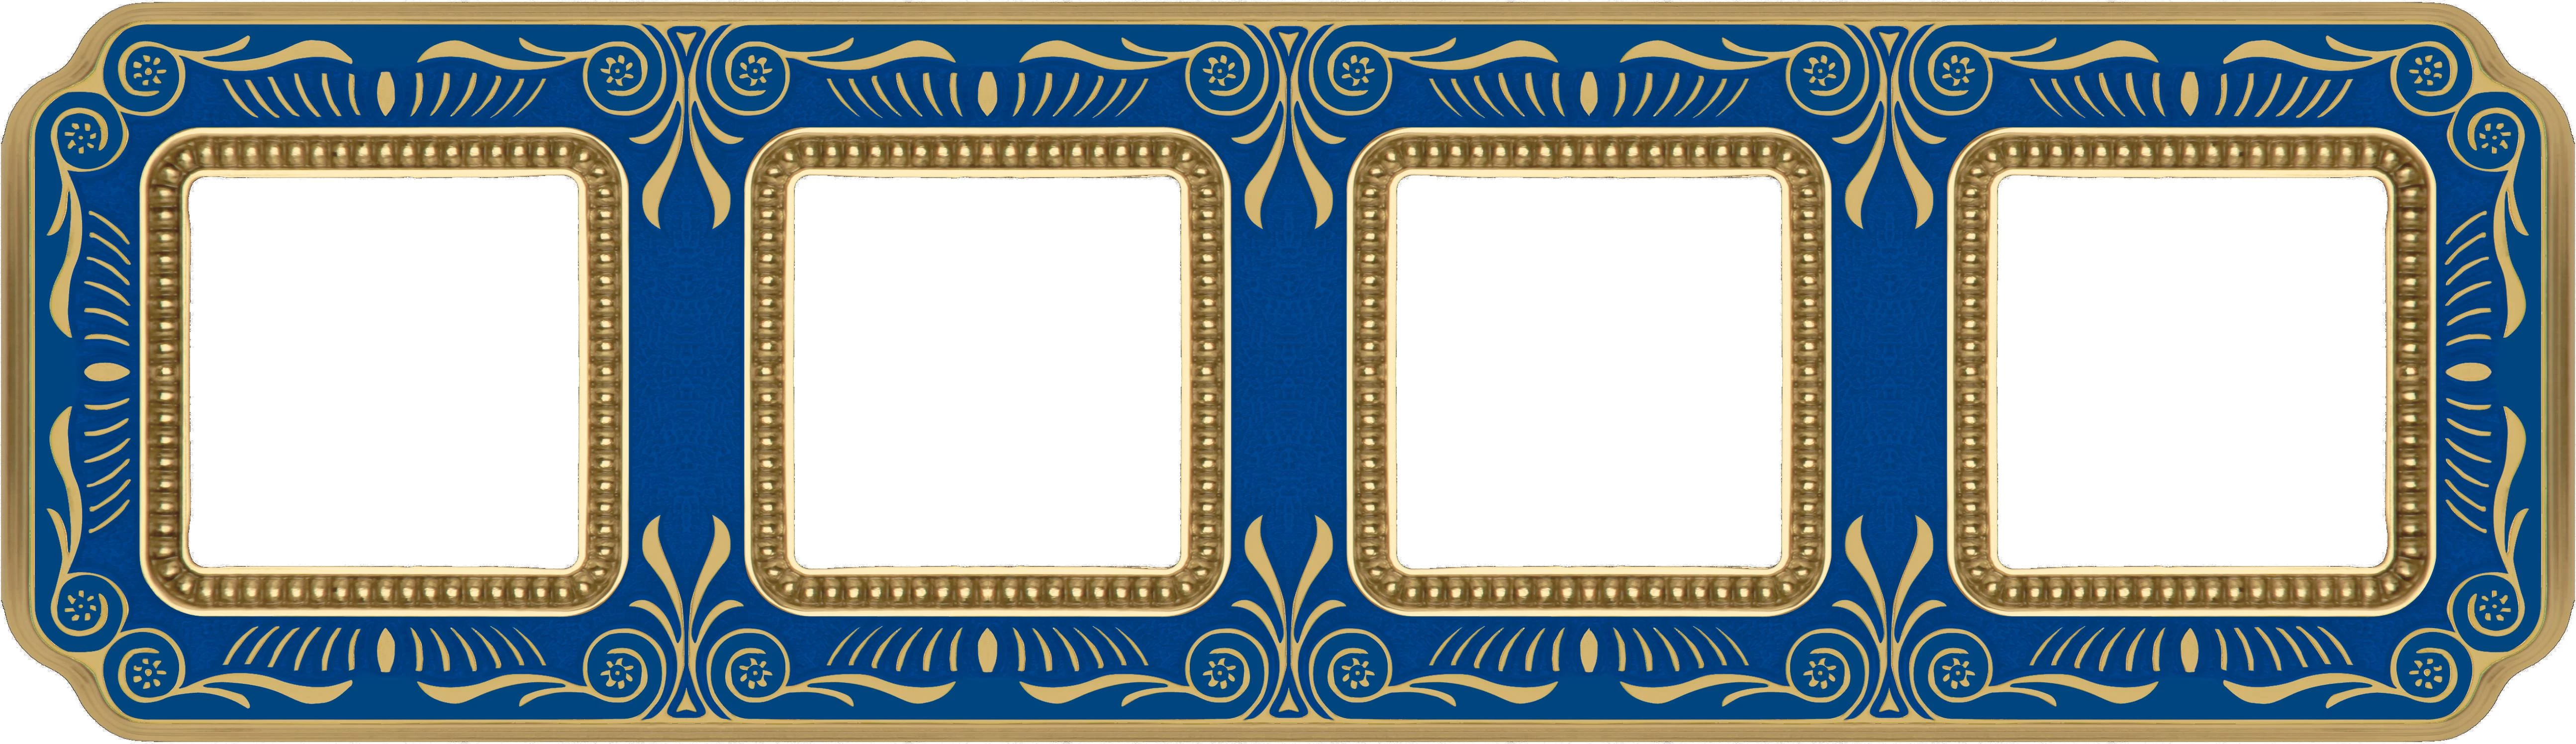  артикул FD01364AZEN название Рамка 4-ая (четверная), цвет Голубой сапфир, Firenze, Fede